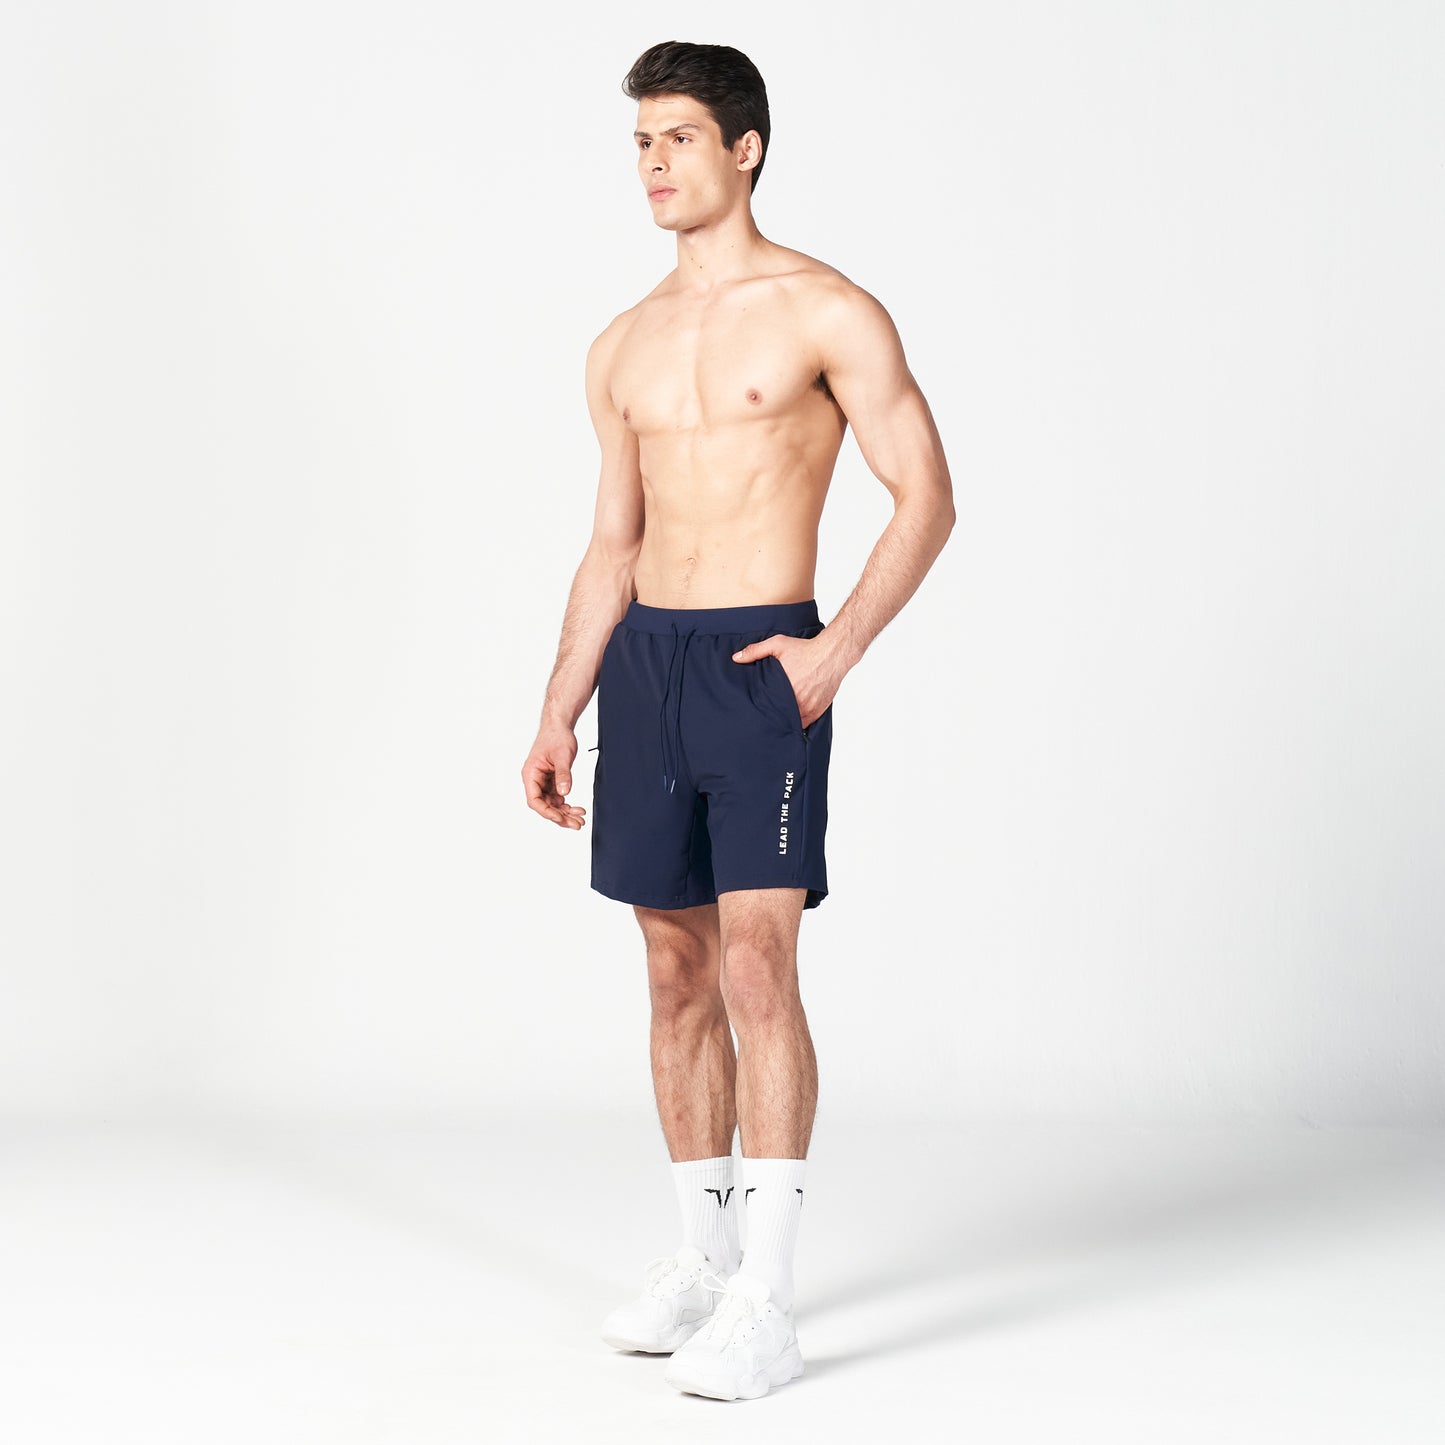 squatwolf-gym-wear-ribbed-flex-shorts-navy-workout-short-for-men